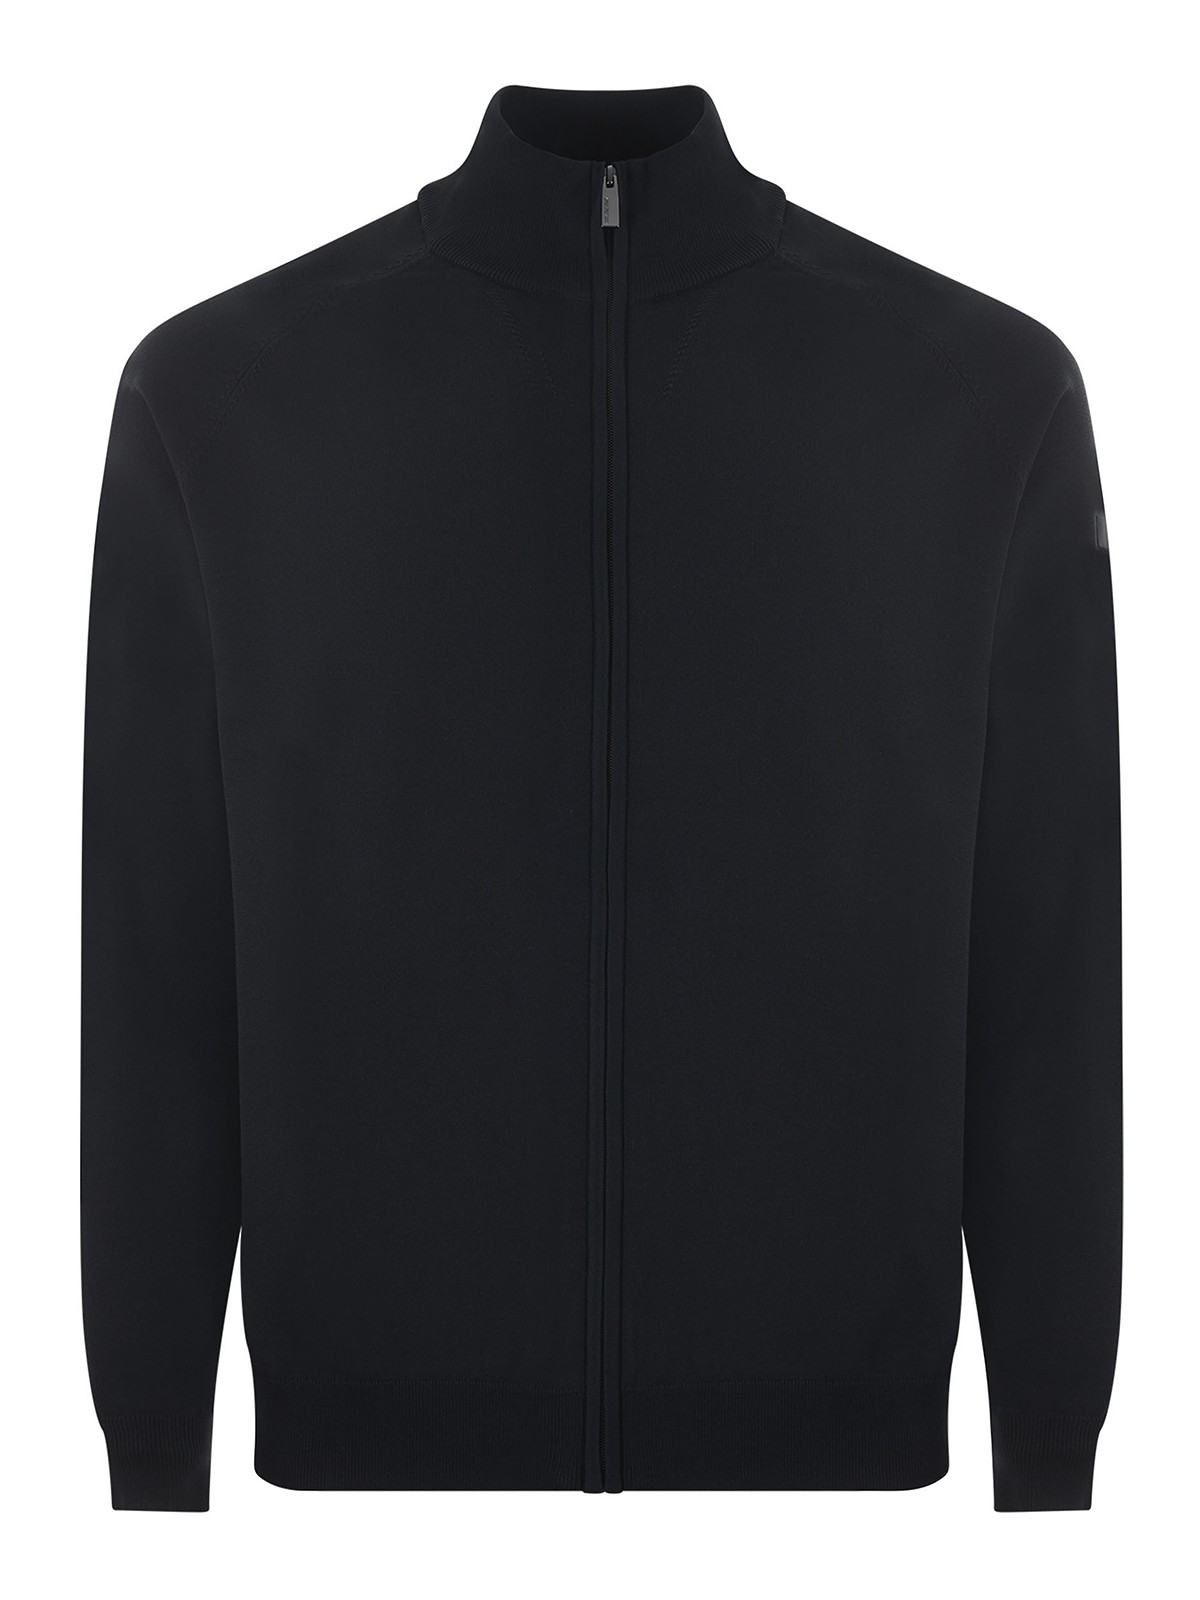 Rrd Roberto Ricci Designs High Neck Zipped Sweater With Logo In Black